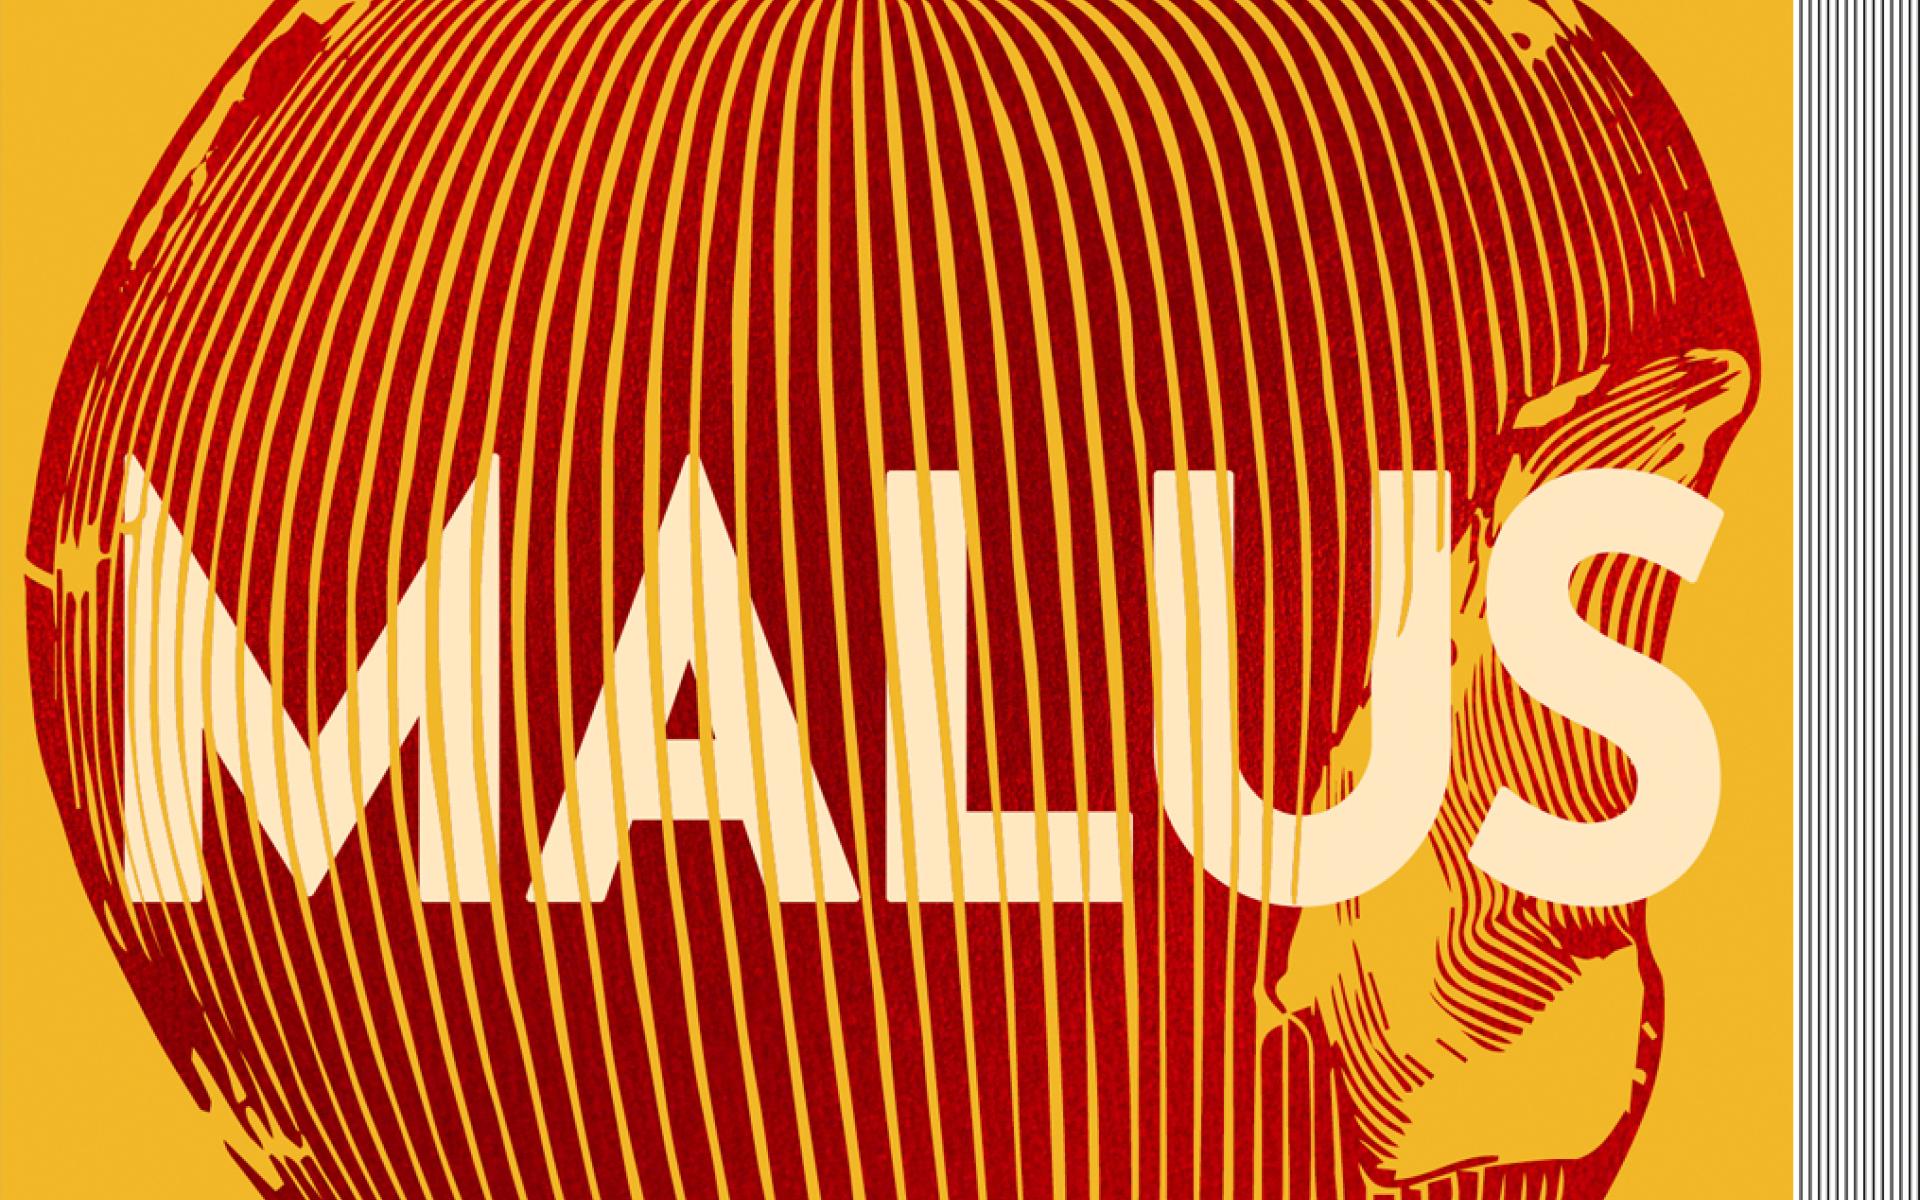 Cover Malus